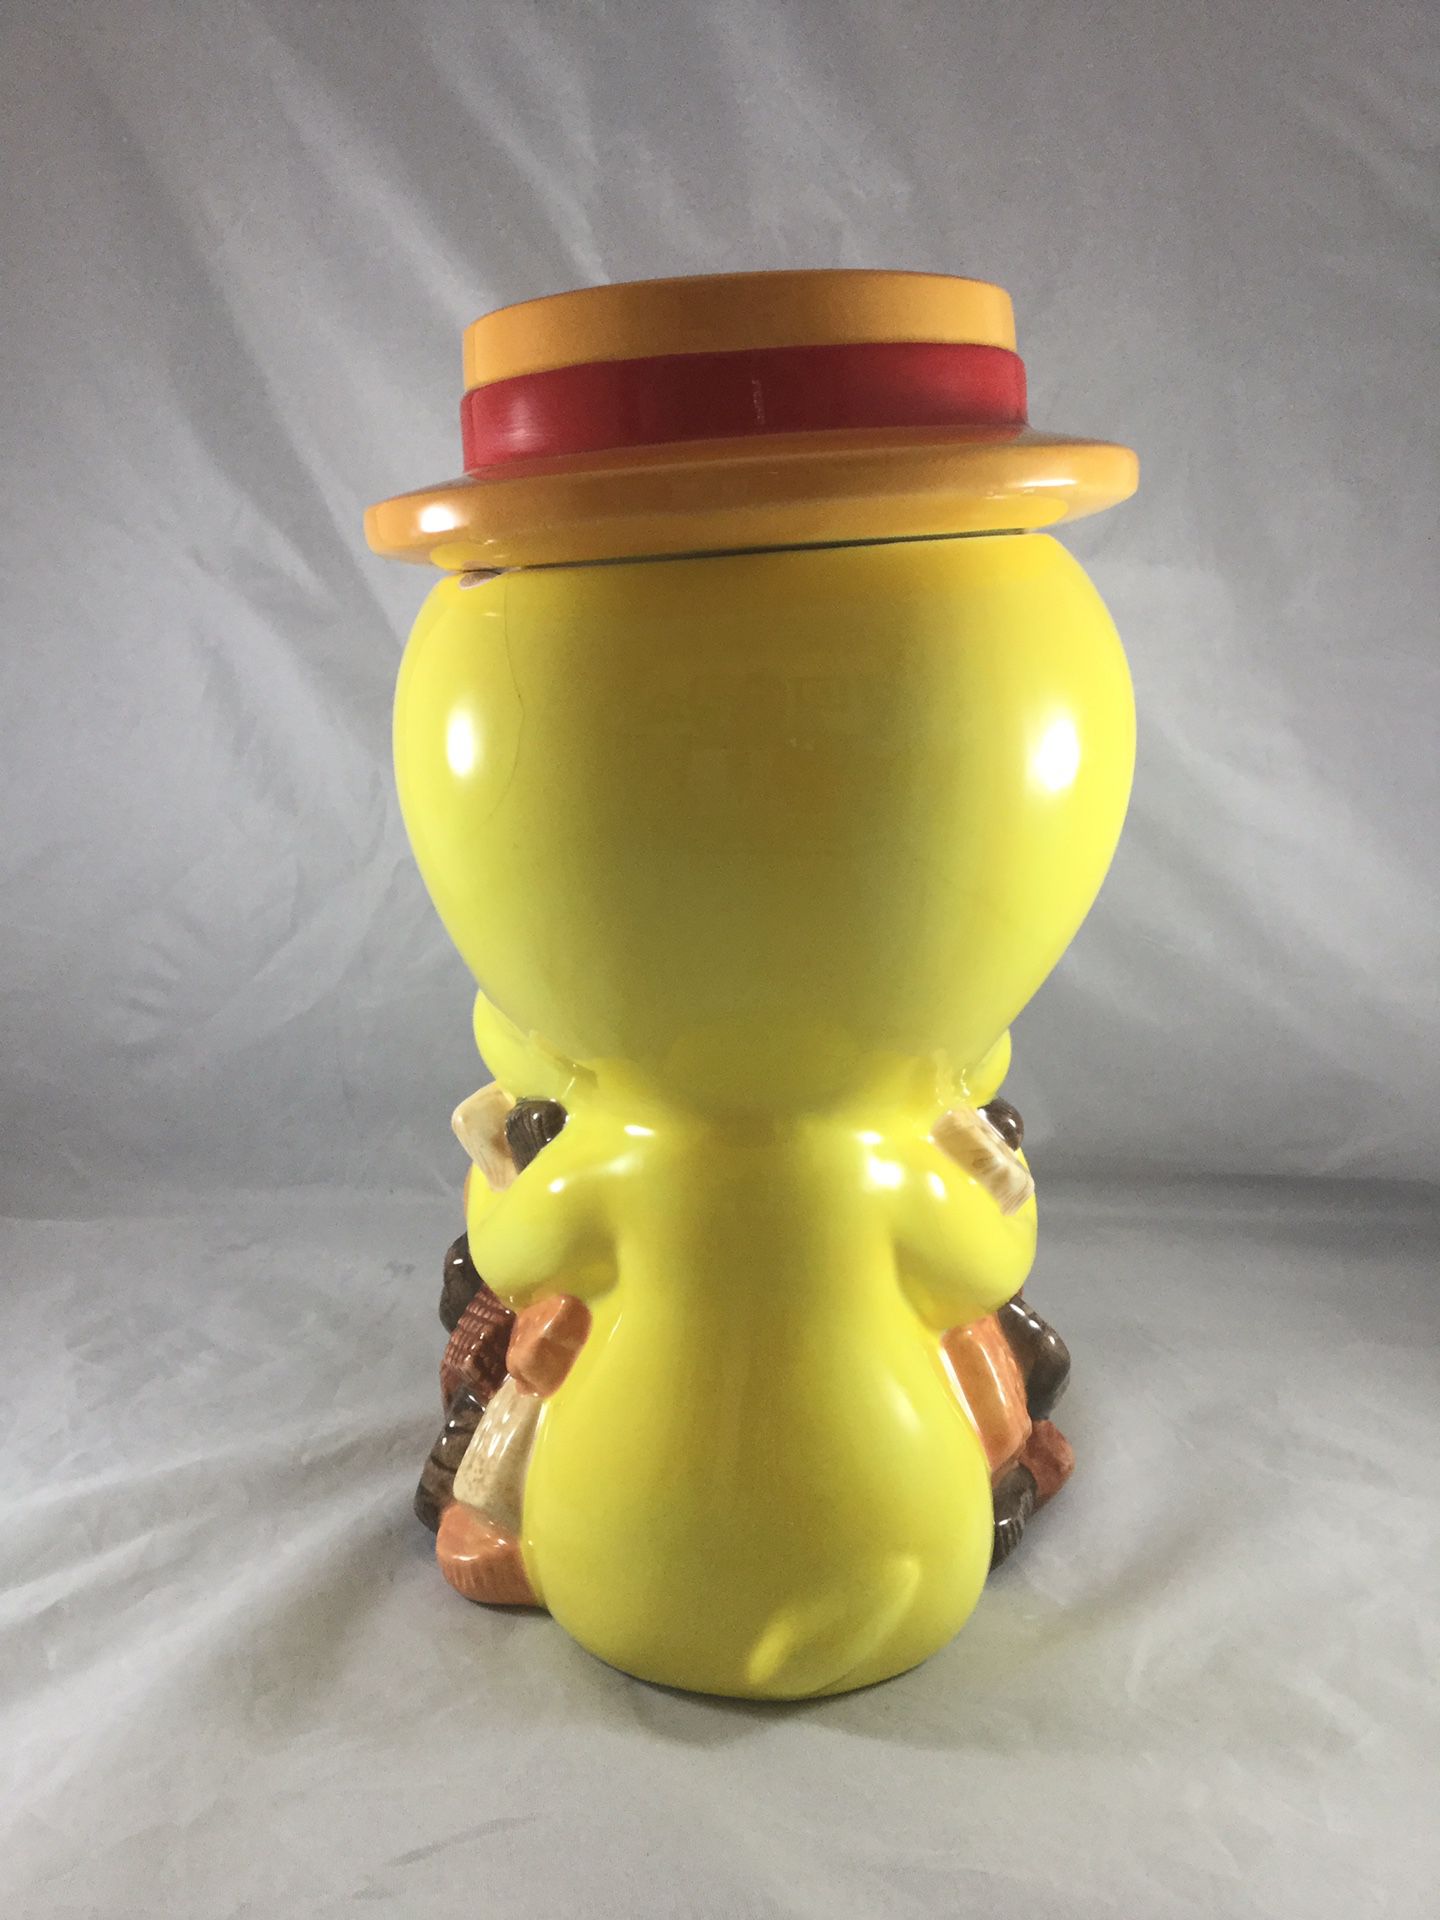 Tweety Bird Cookie Jar from 1997 Looney Tunes Warner Brother by Gibson